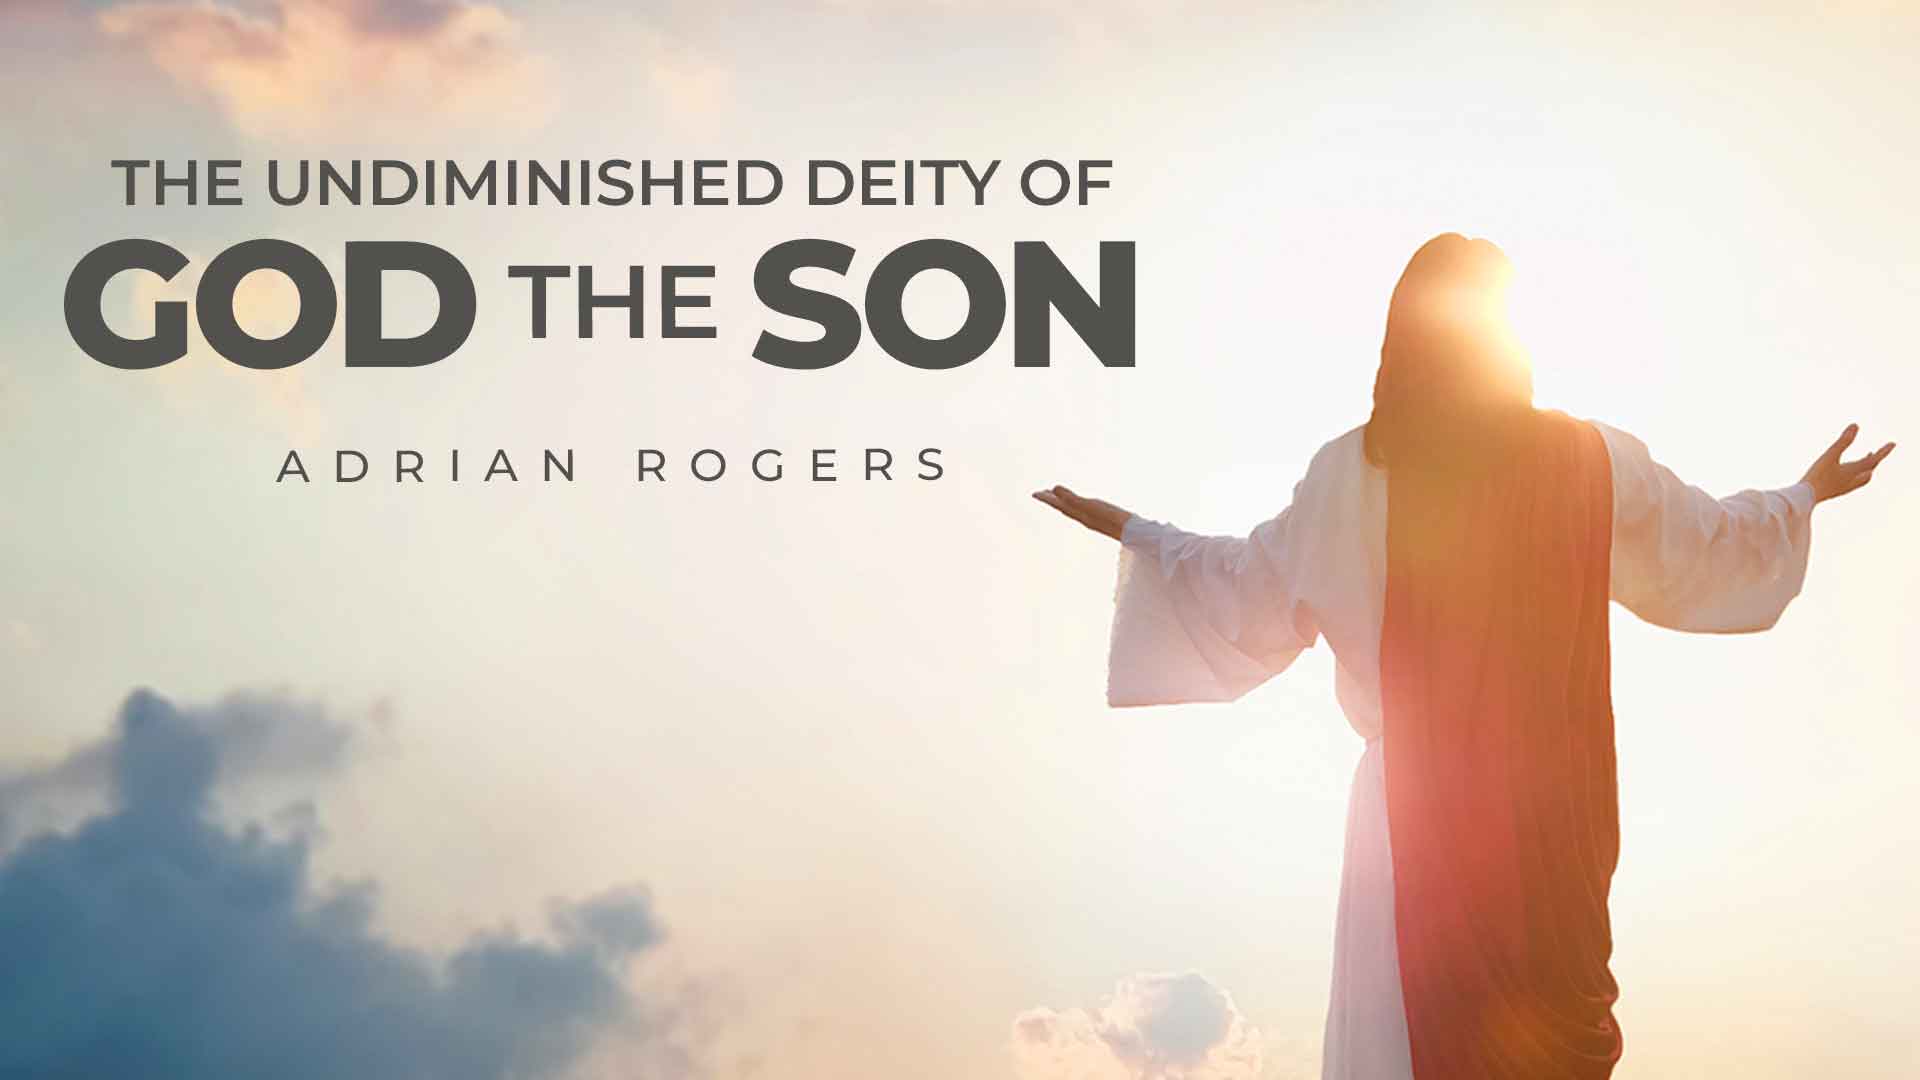 The Undiminished Deity of God the Son 1920x1080